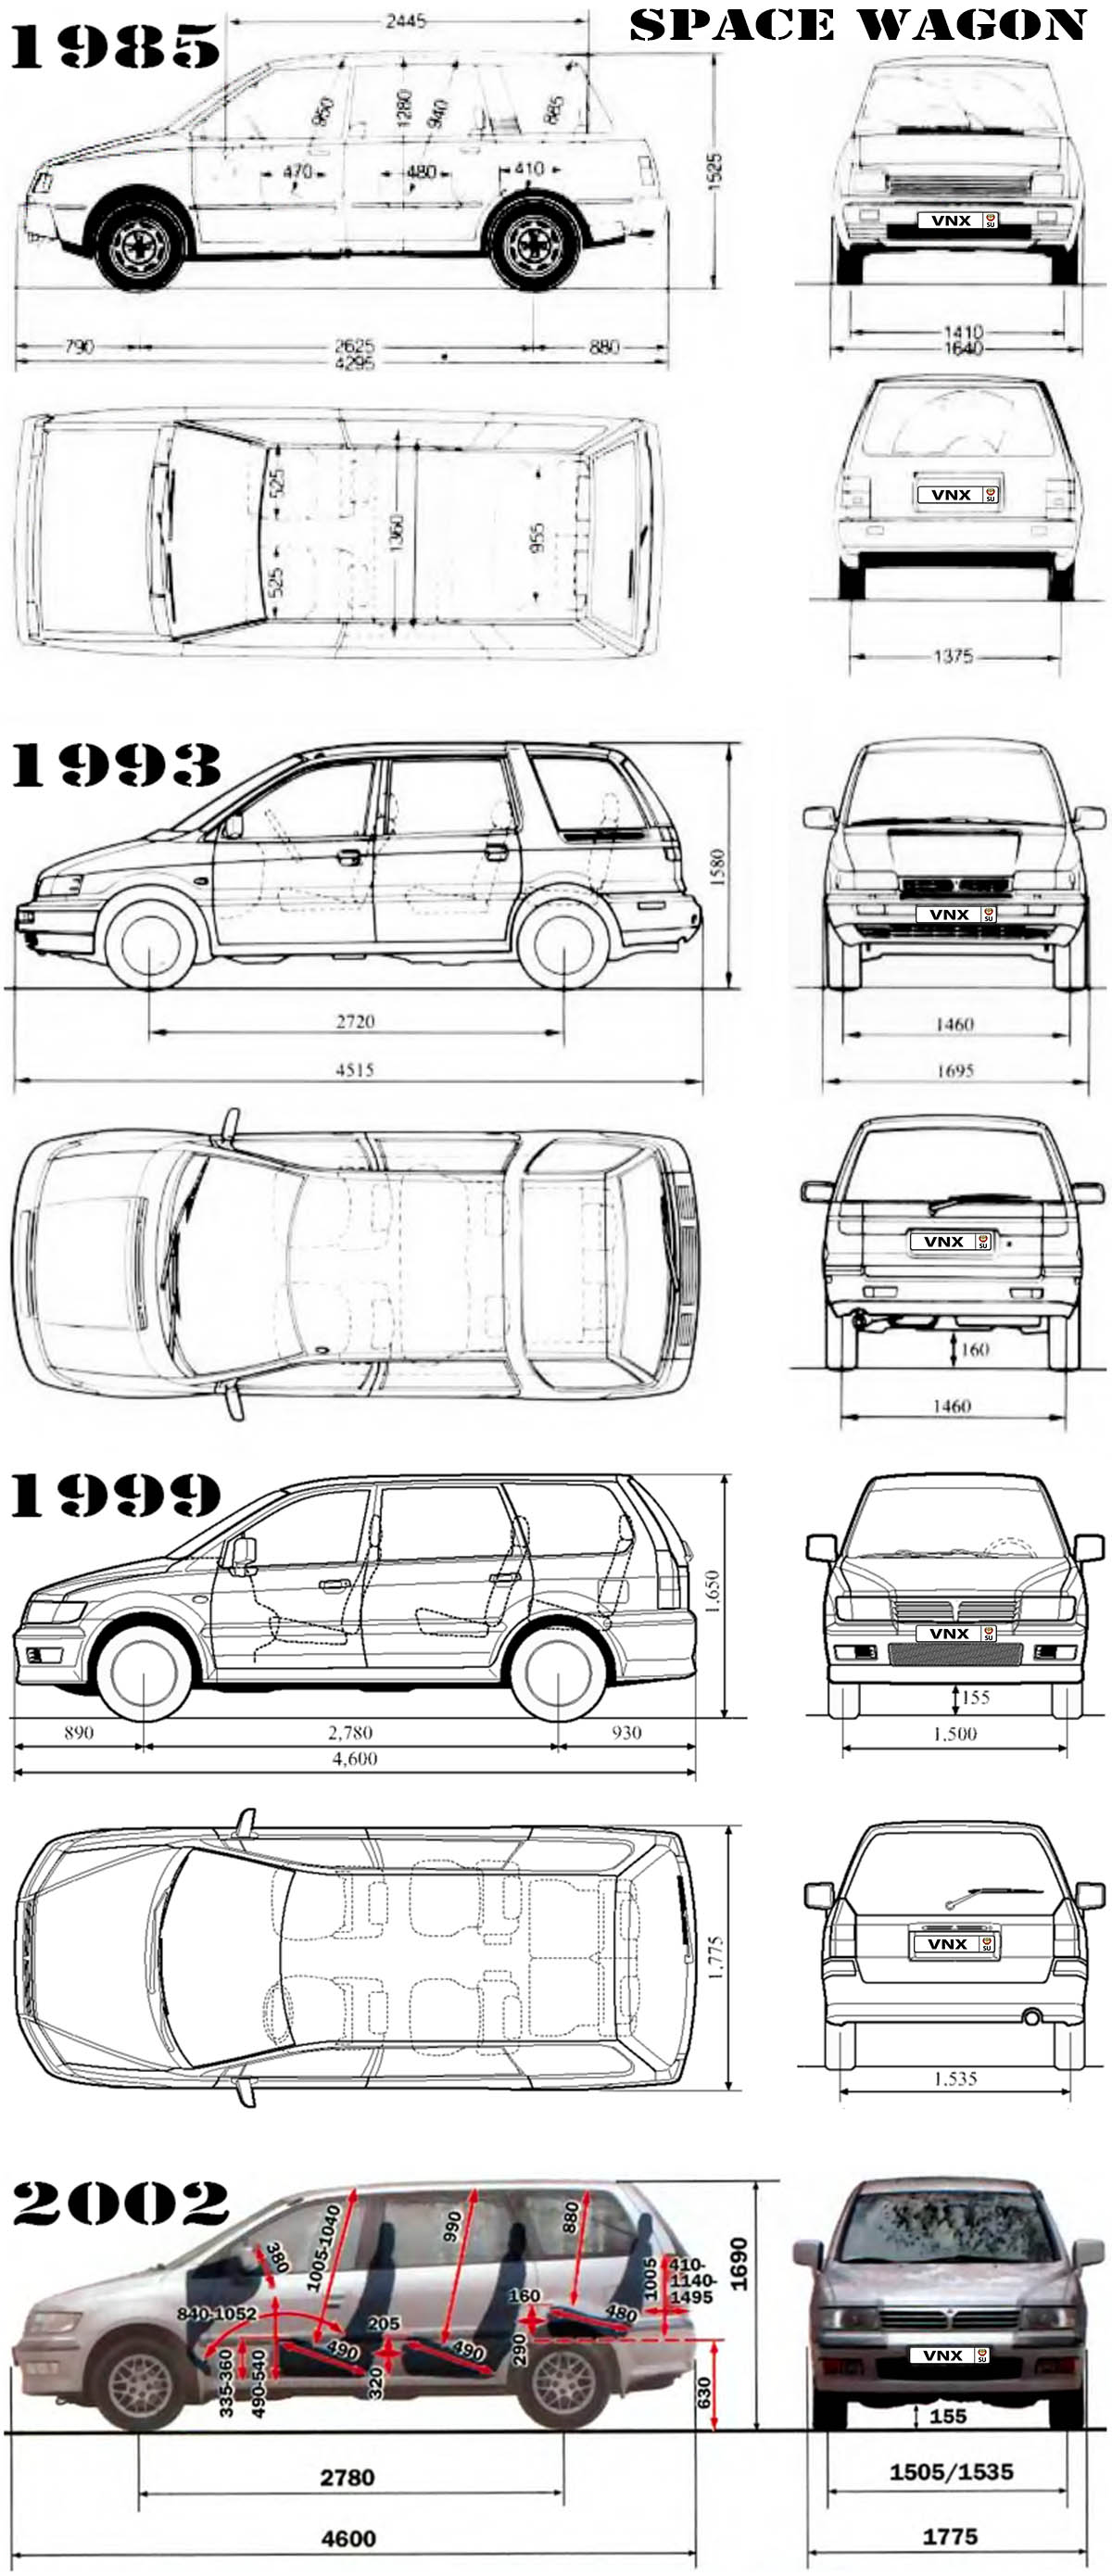 Габаритные размеры Мицубиси Спэйс Вагон 1983-2003 (dimensions Mitsubishi Space Wagon mk1/mk2/mk3)